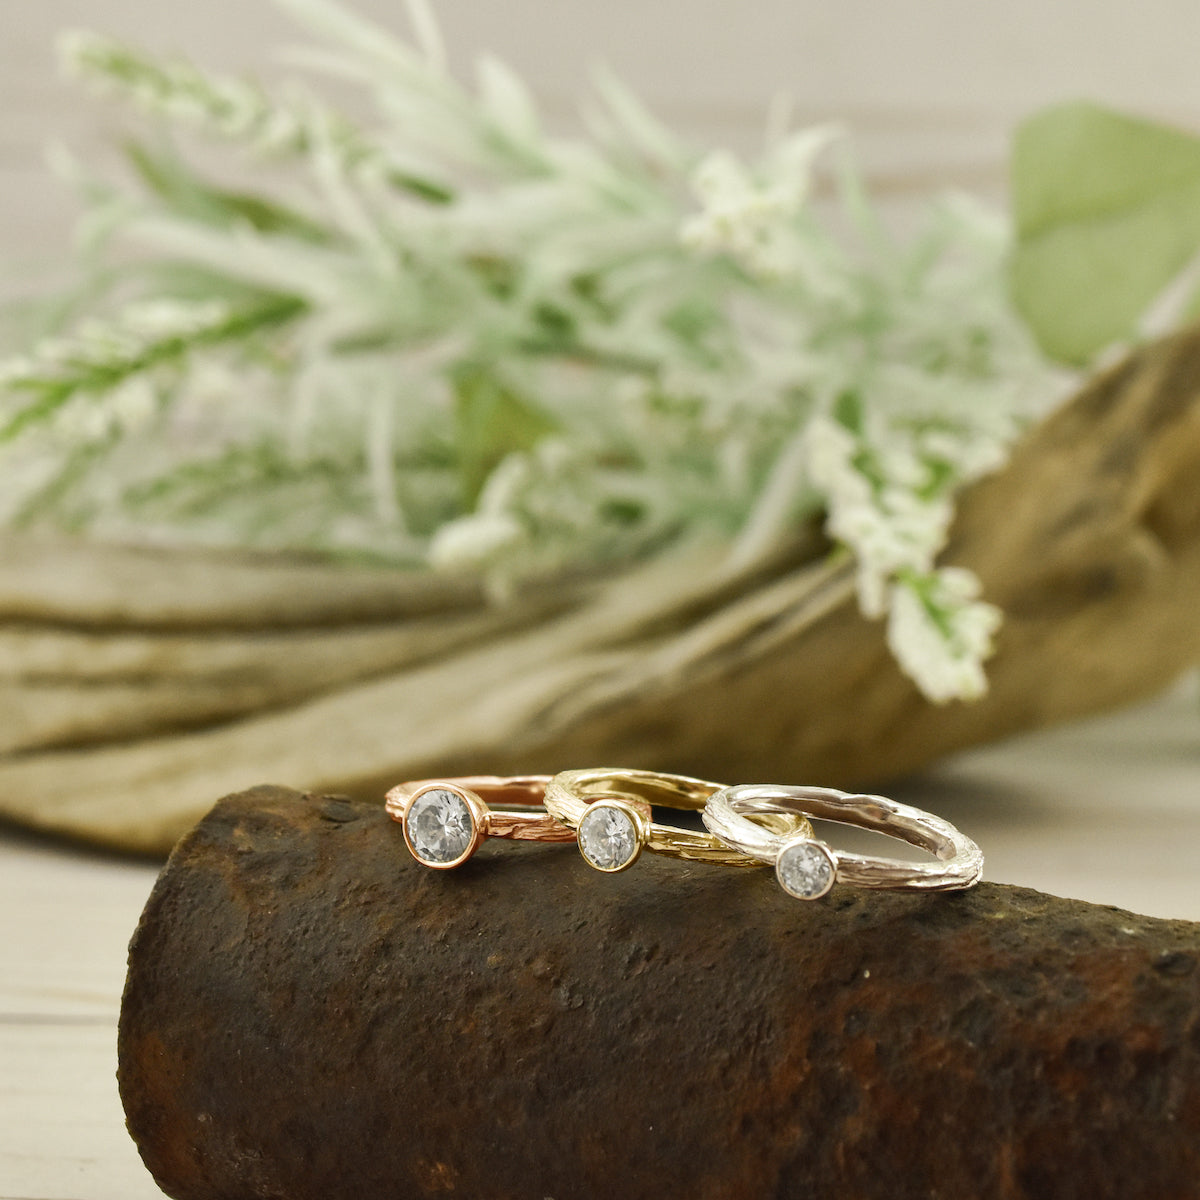 Gold Diamond Twig Ring - your choice of 5mm stone & gold - Wedding Ring  Recycled Diamond / 18K Palladium White Gold  Recycled Diamond / 14K Rose Gold 6218 - handmade by Beth Millner Jewelry